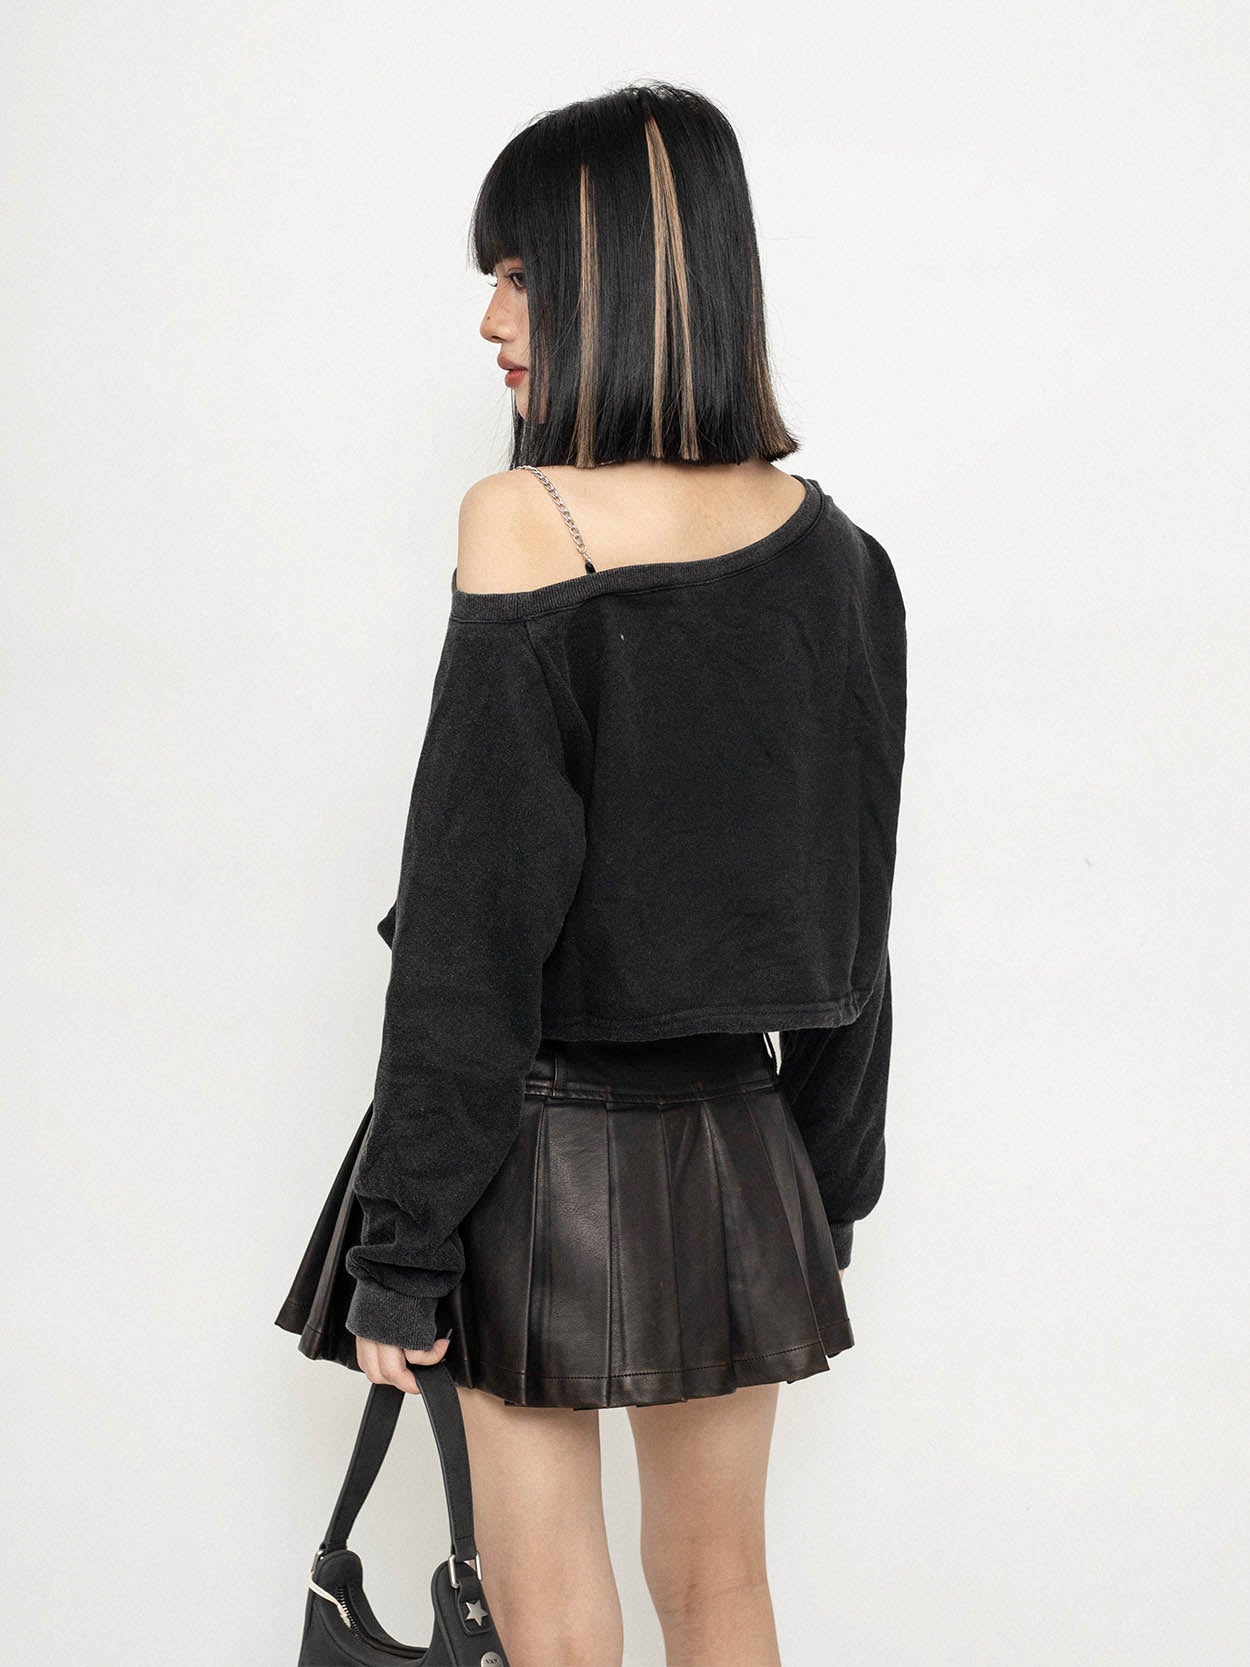 Maillard Leather A-Line Sweet Skirt